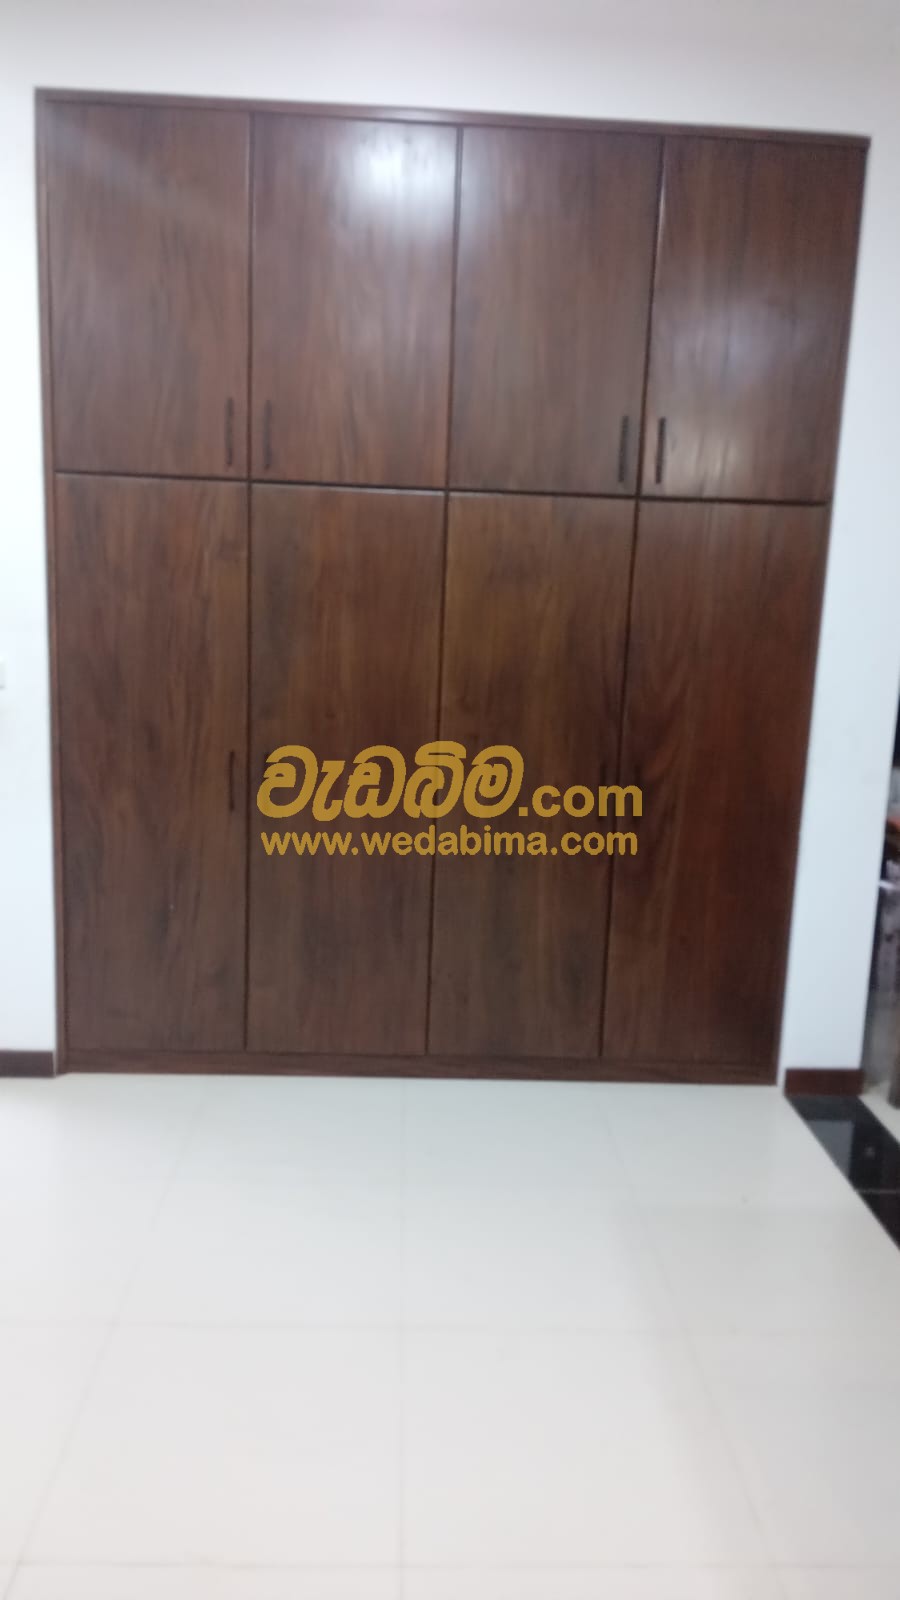 Wooden contractors in sri lanka price